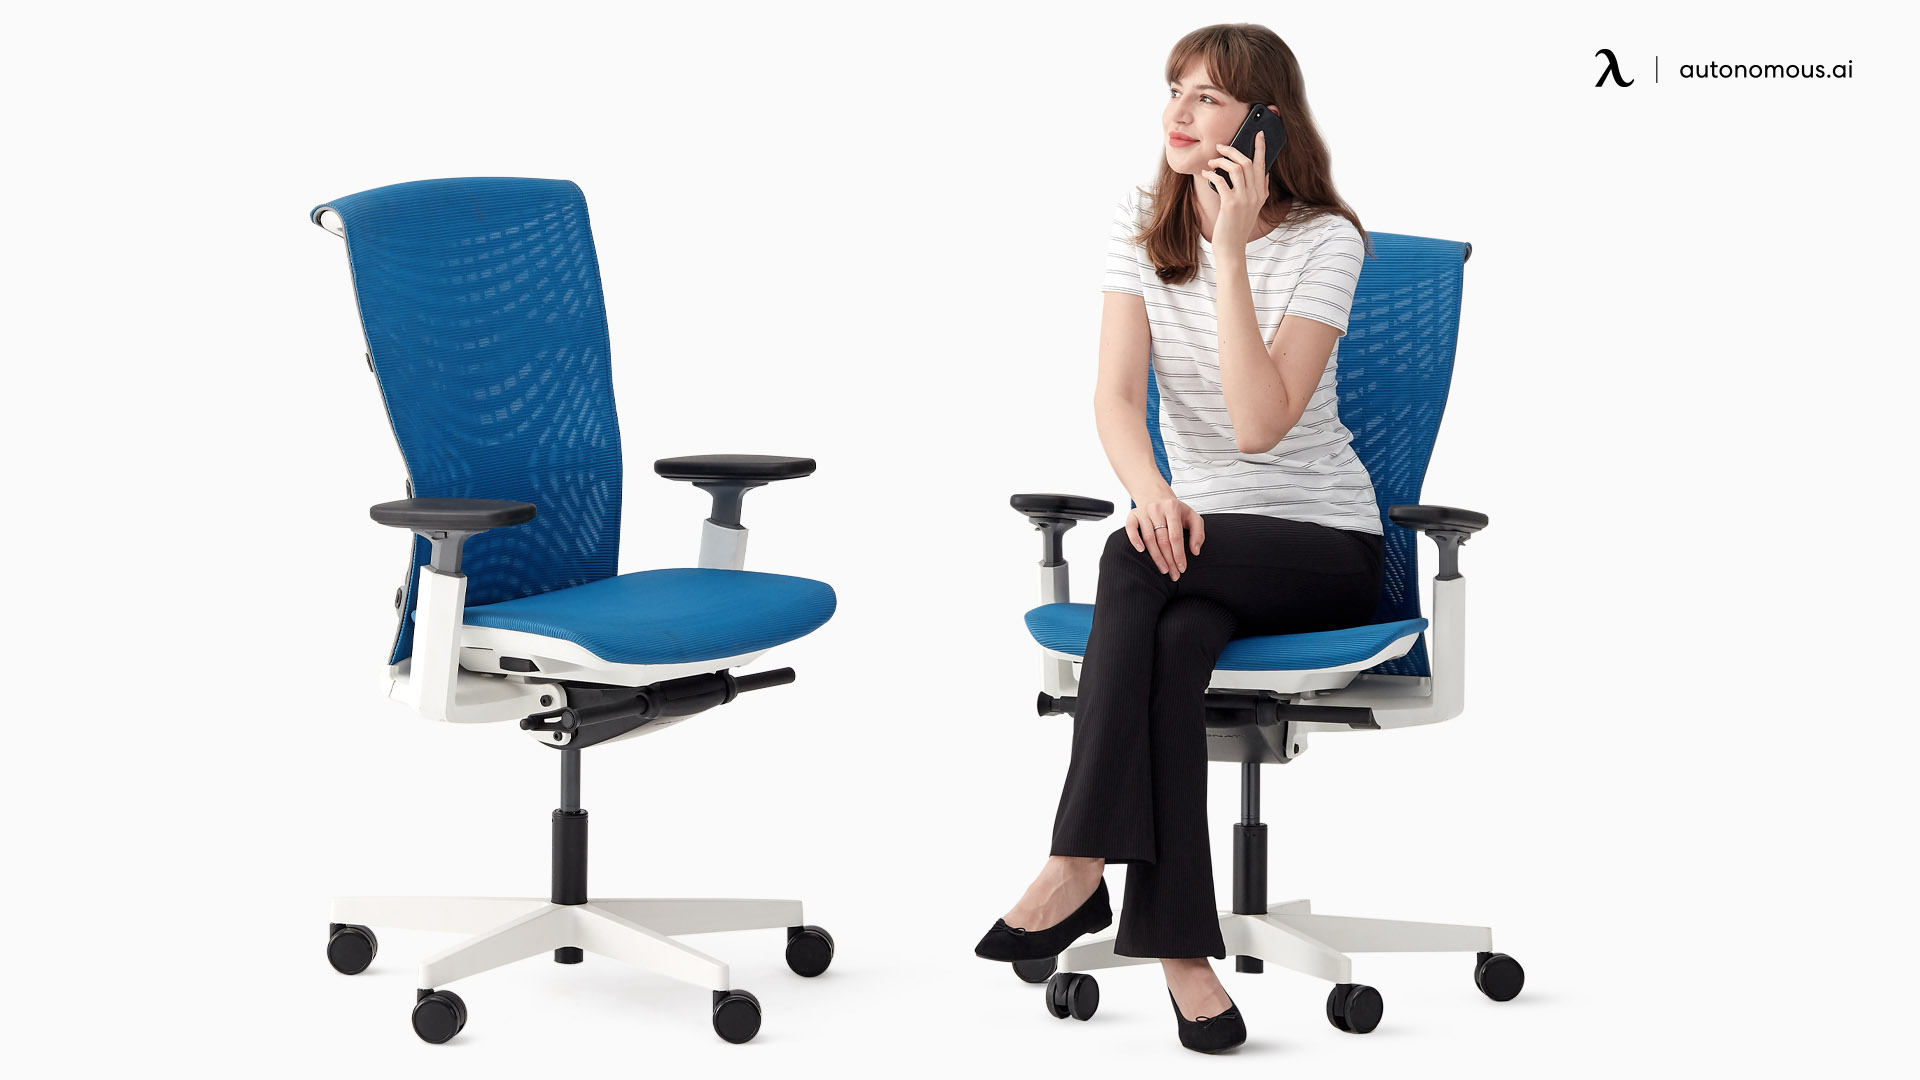 ErgoChair Pro+ top-rated ergonomic office chair